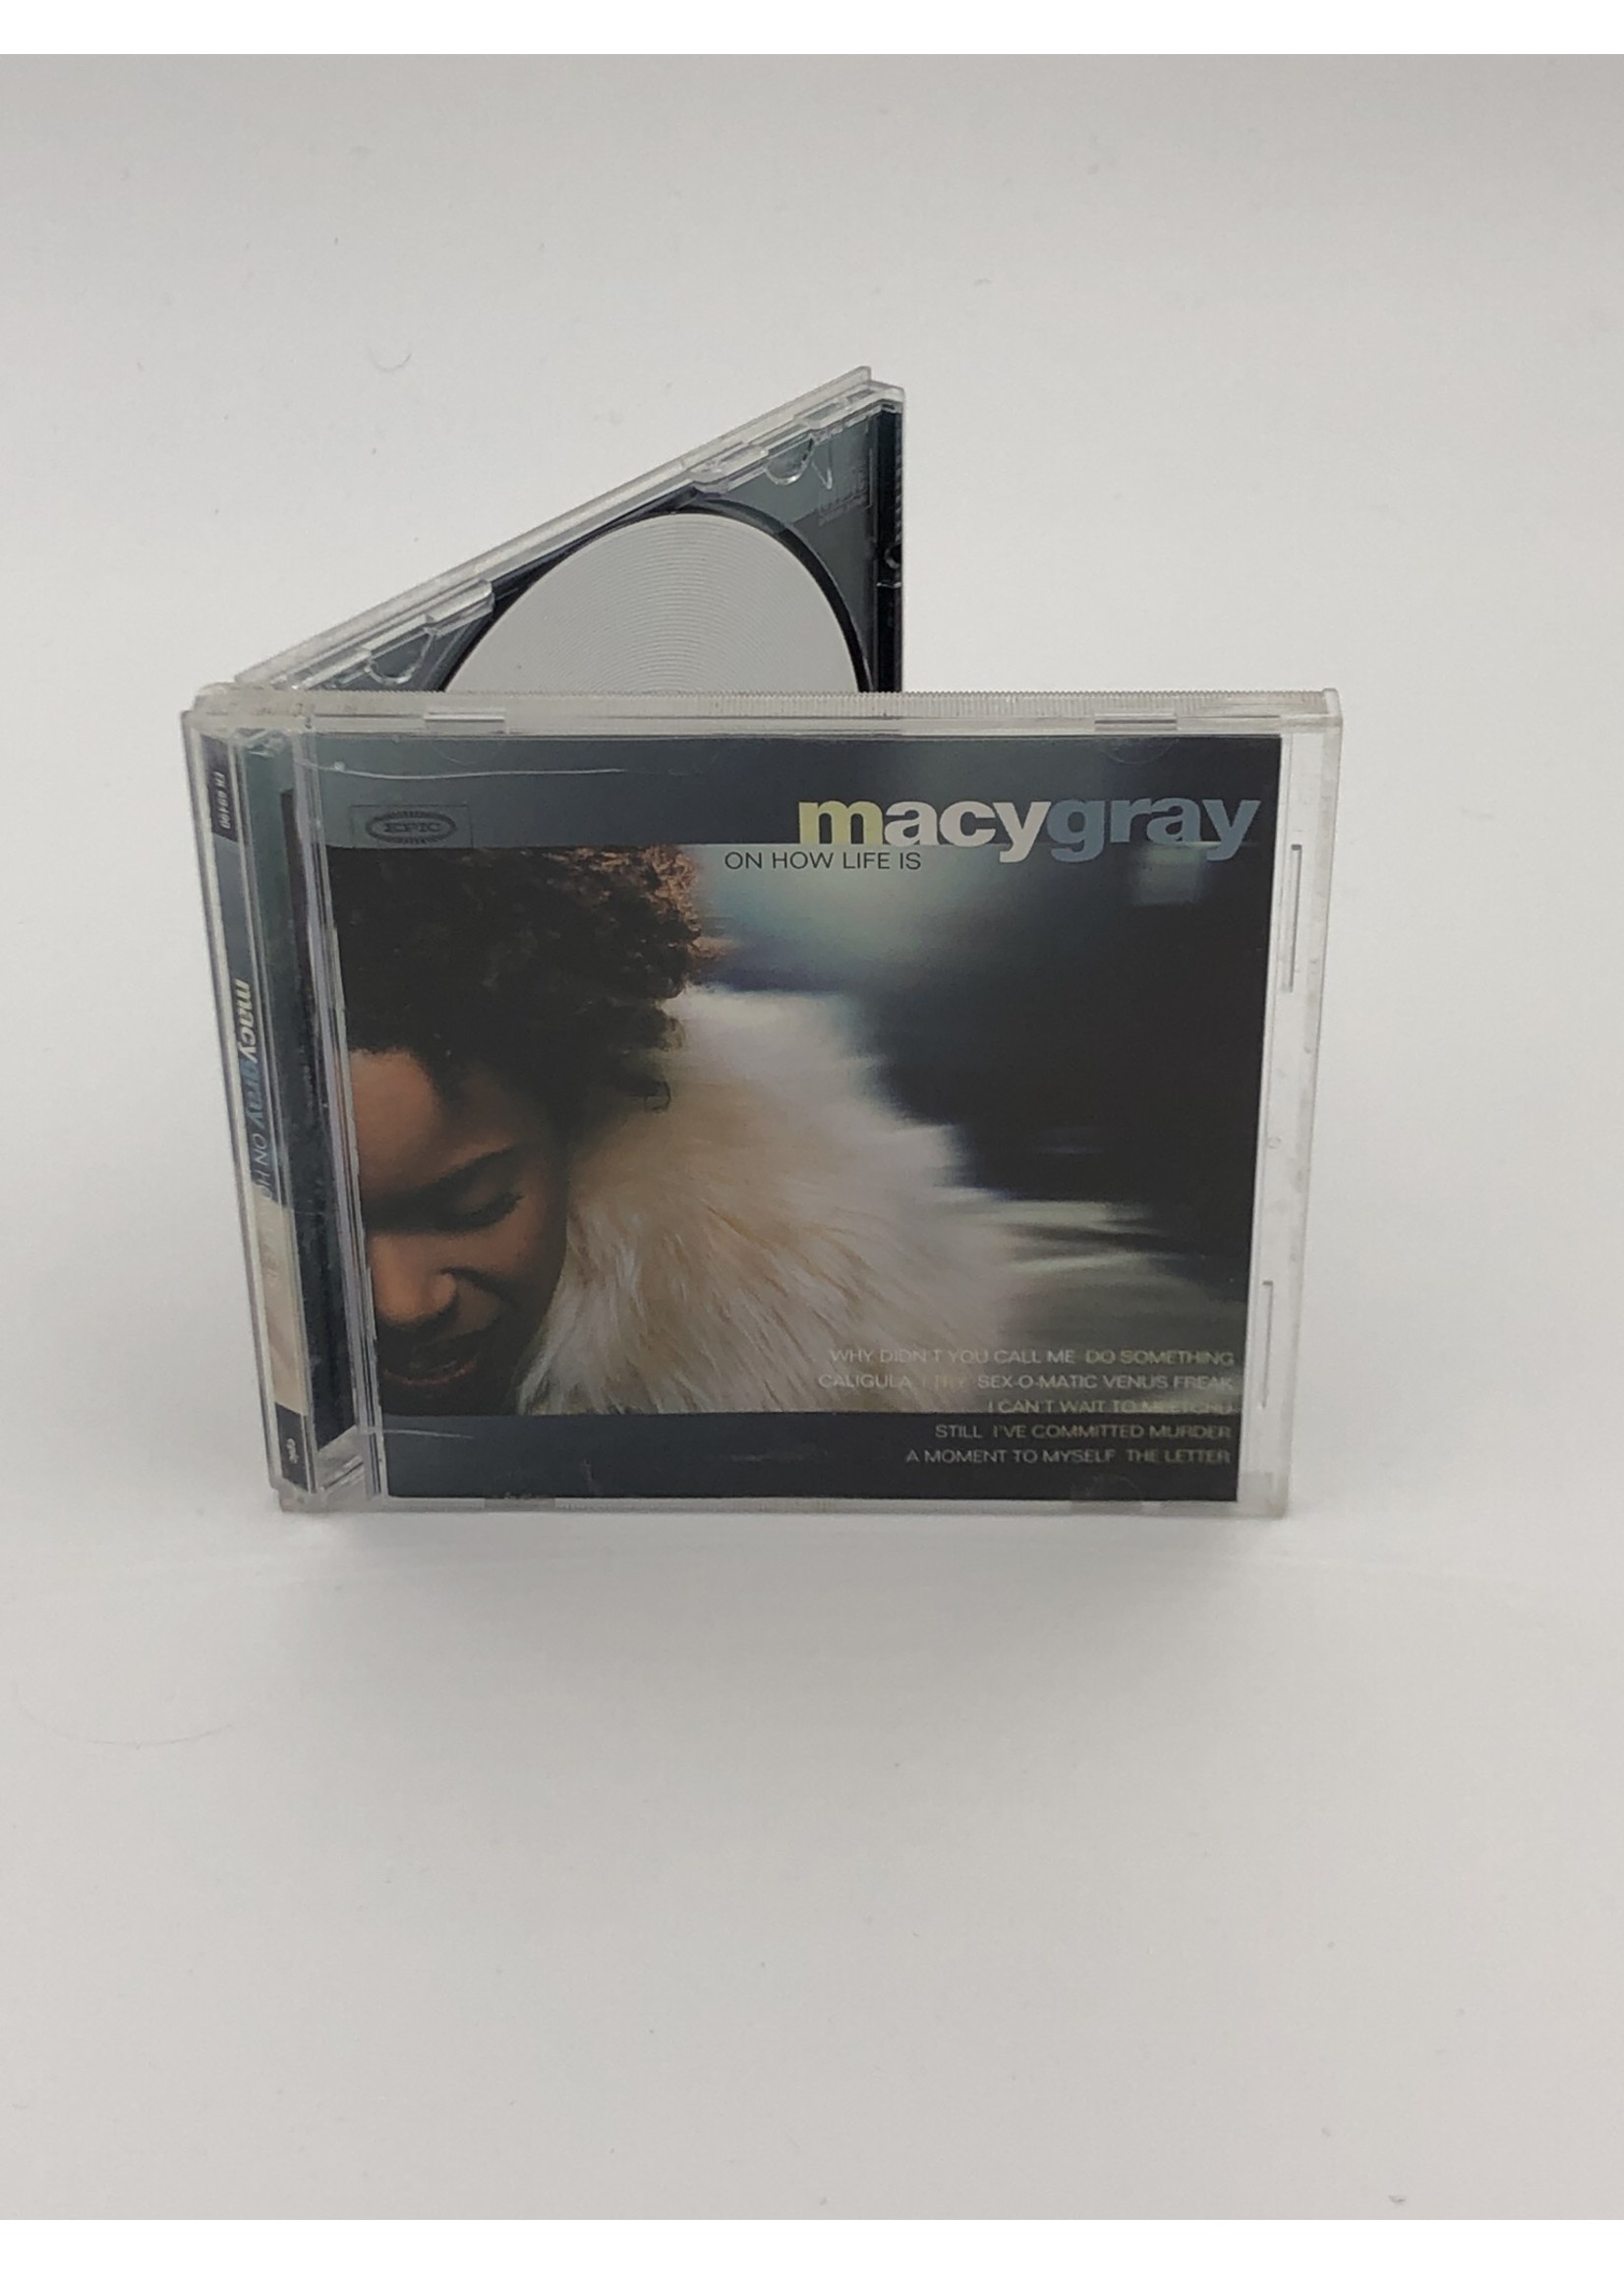 CD Macy Gray: On How Life Is CD